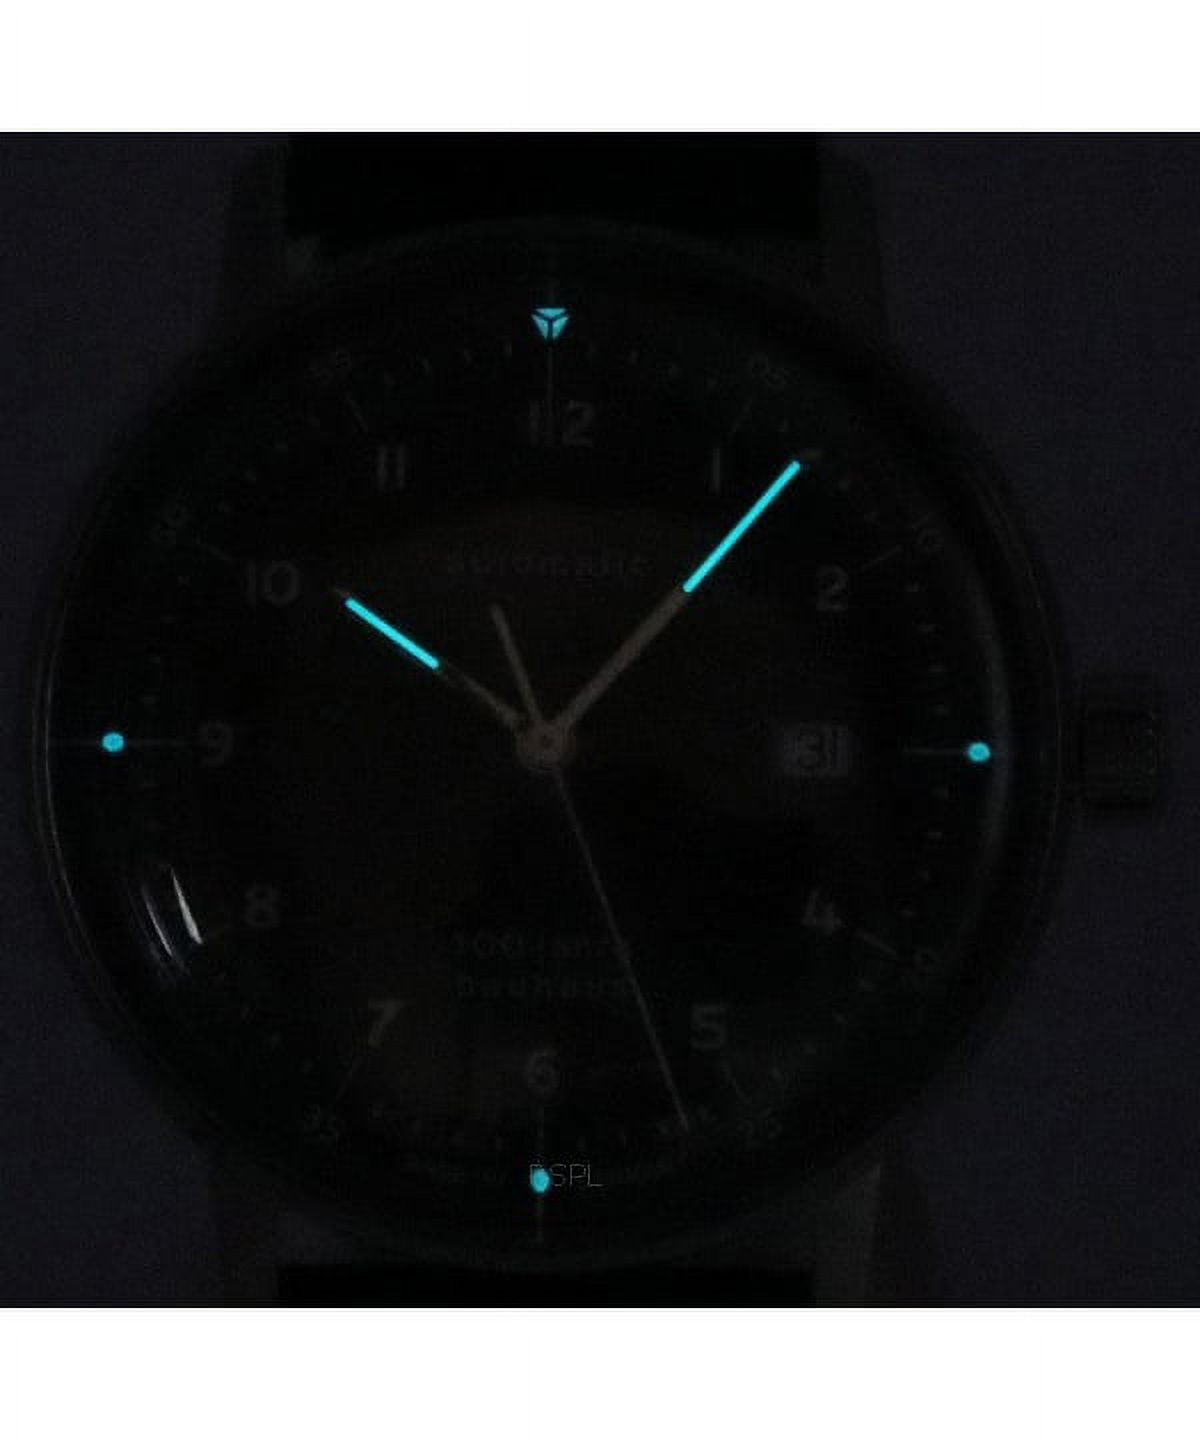 Iron Annie 100 Jahre Bauhaus Leather Strap Black Dial Automatic 50562 Men's  Watch